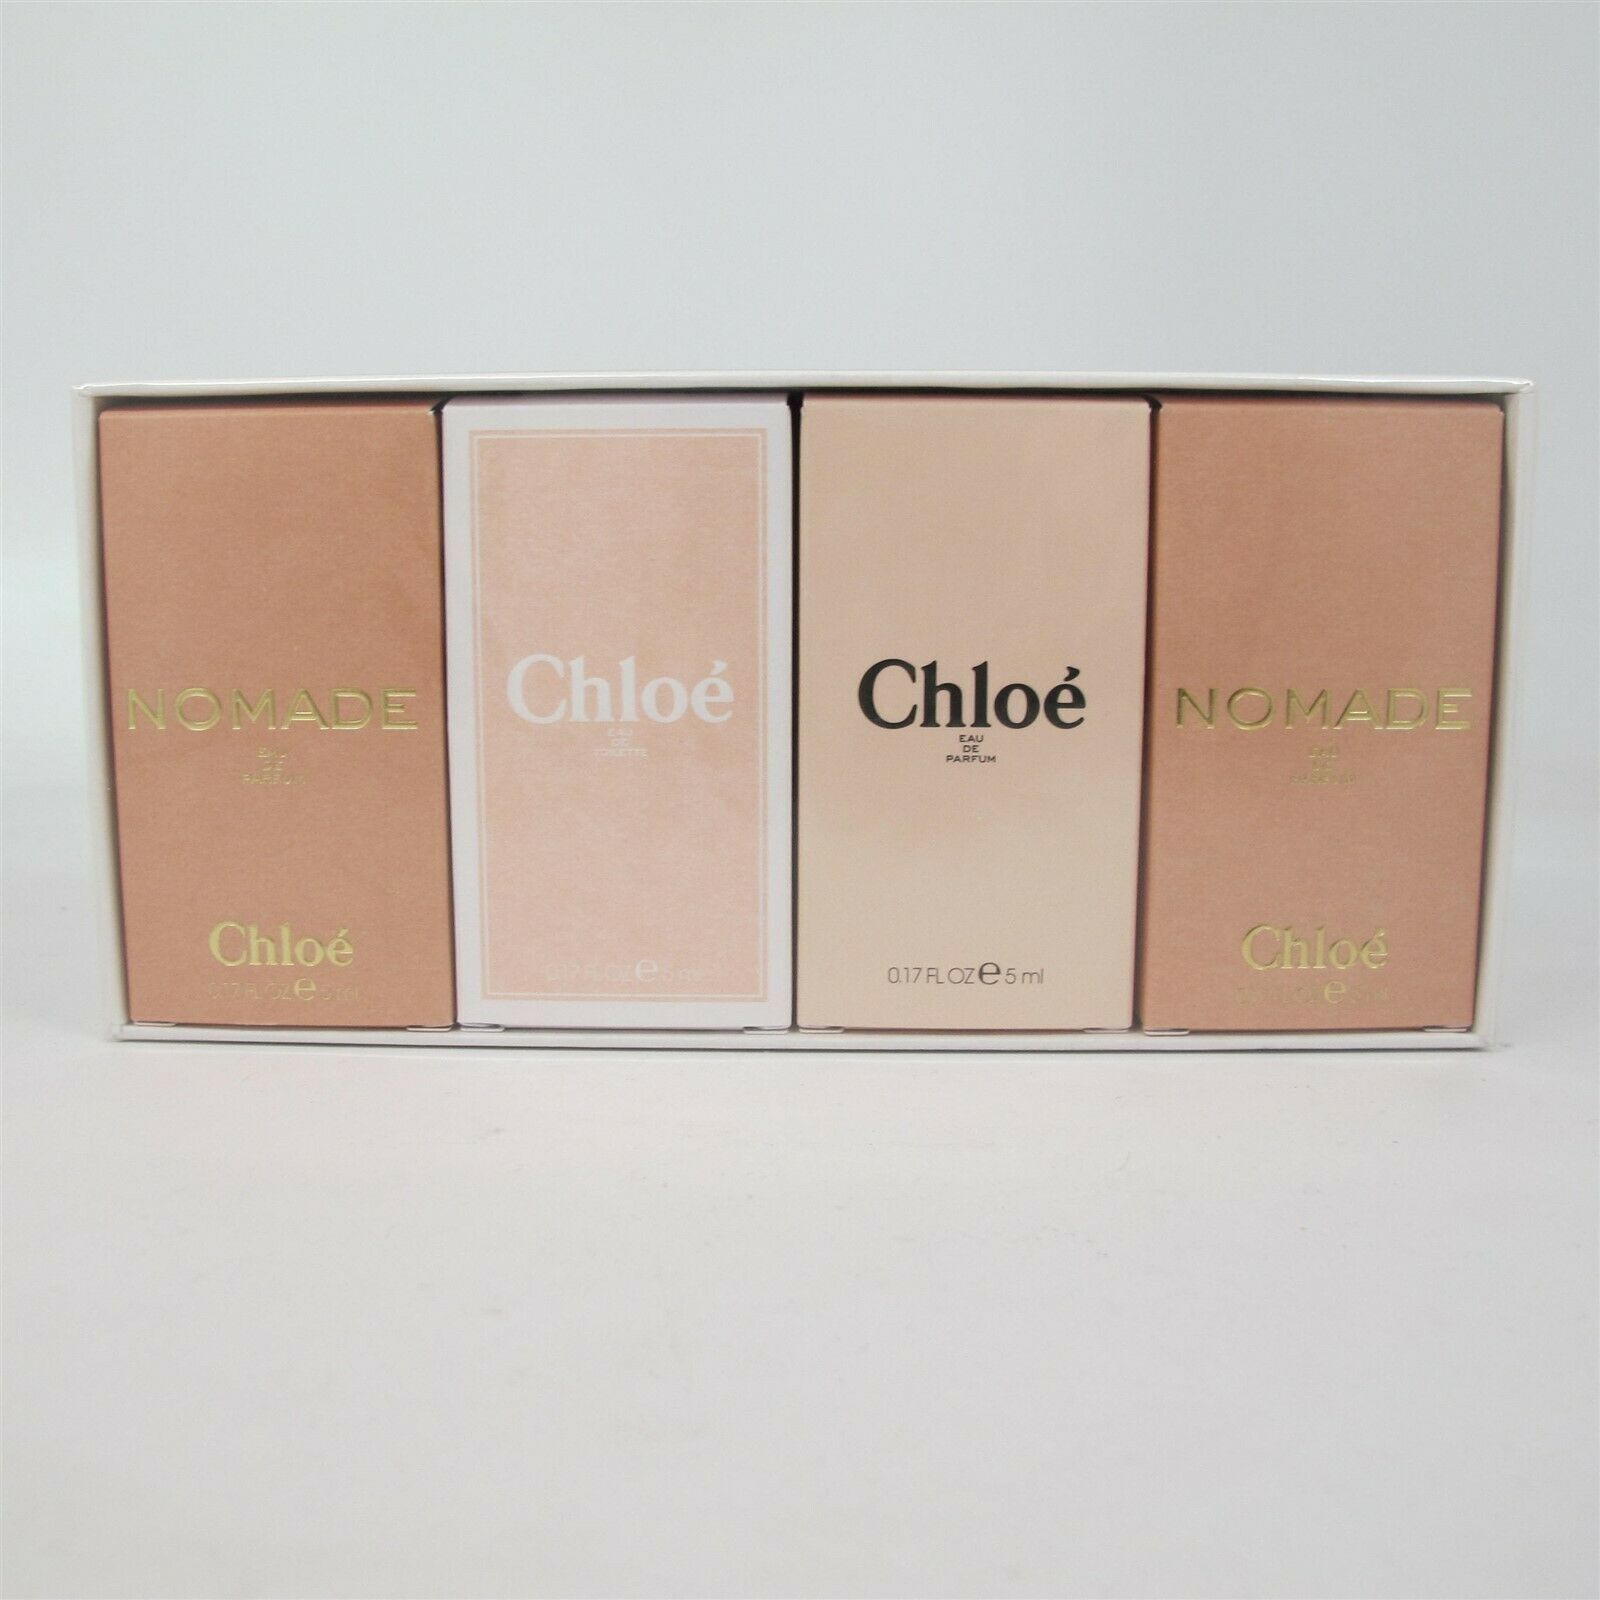 CHLOE 4 Pc Mini Set: 2 x Nomade & 2 x Chloe 5 ml/ 0.17 oz NIB - $45.53